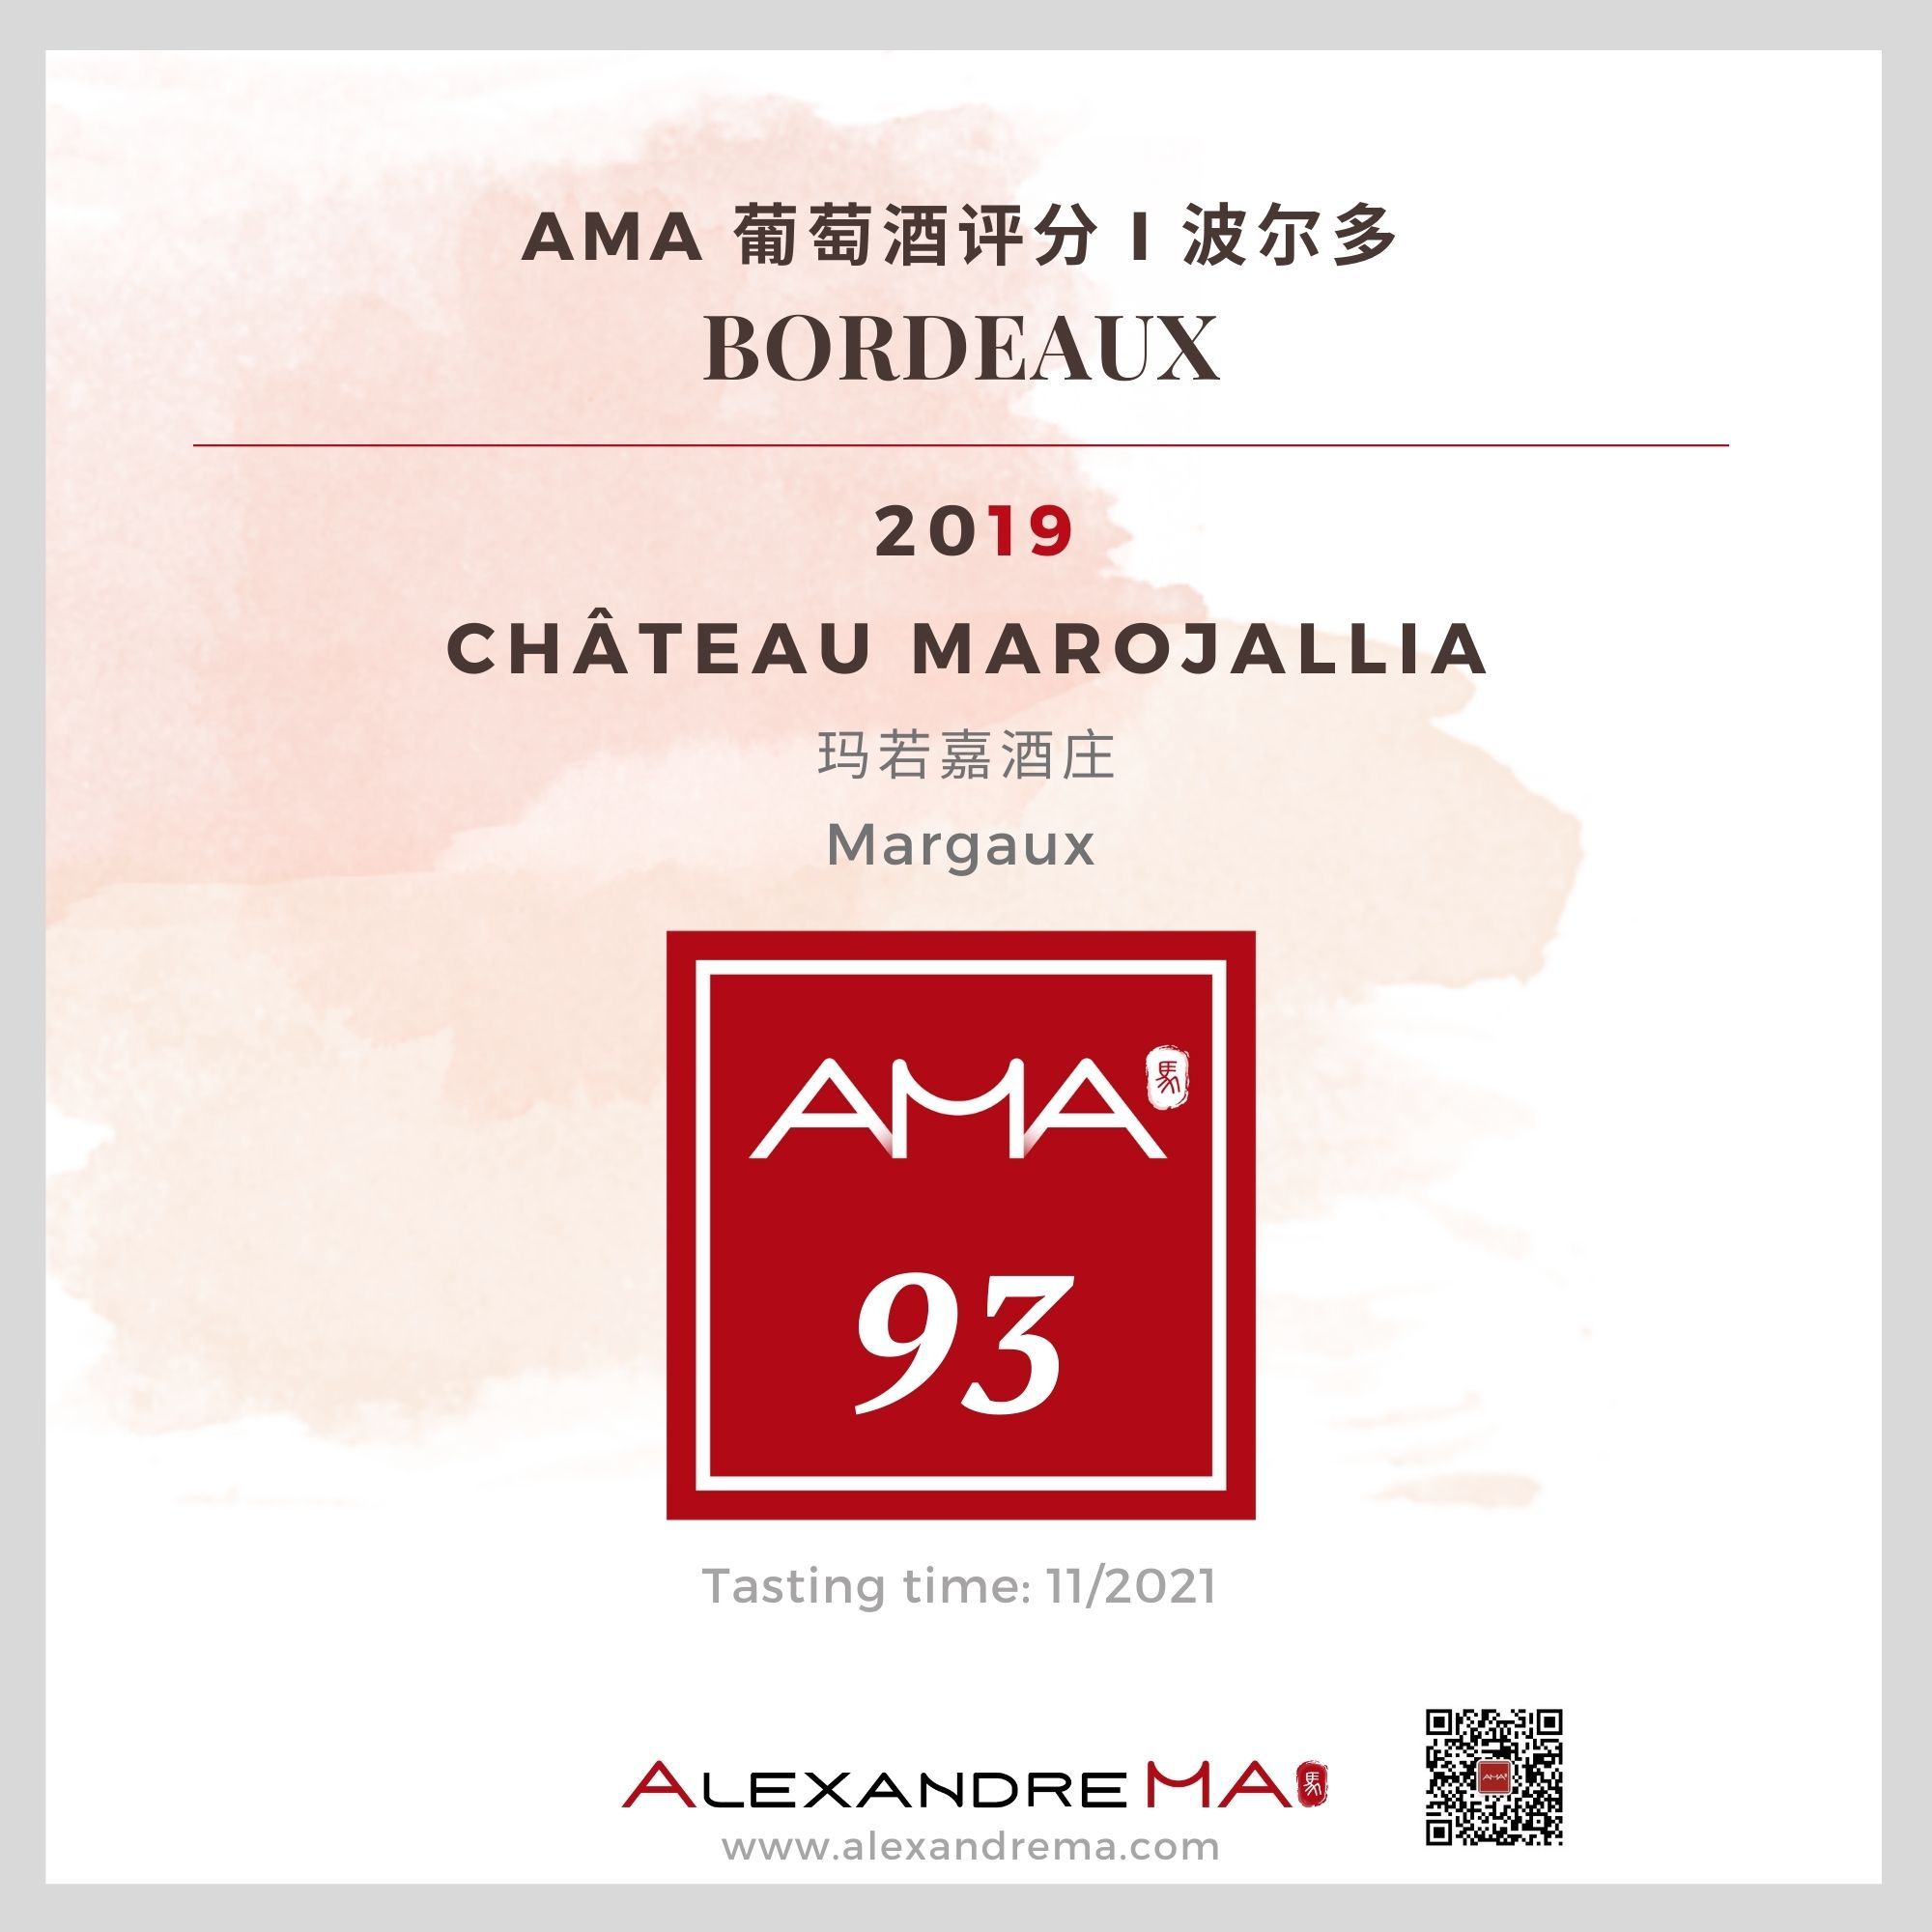 Château Marojallia 2019 - Alexandre MA